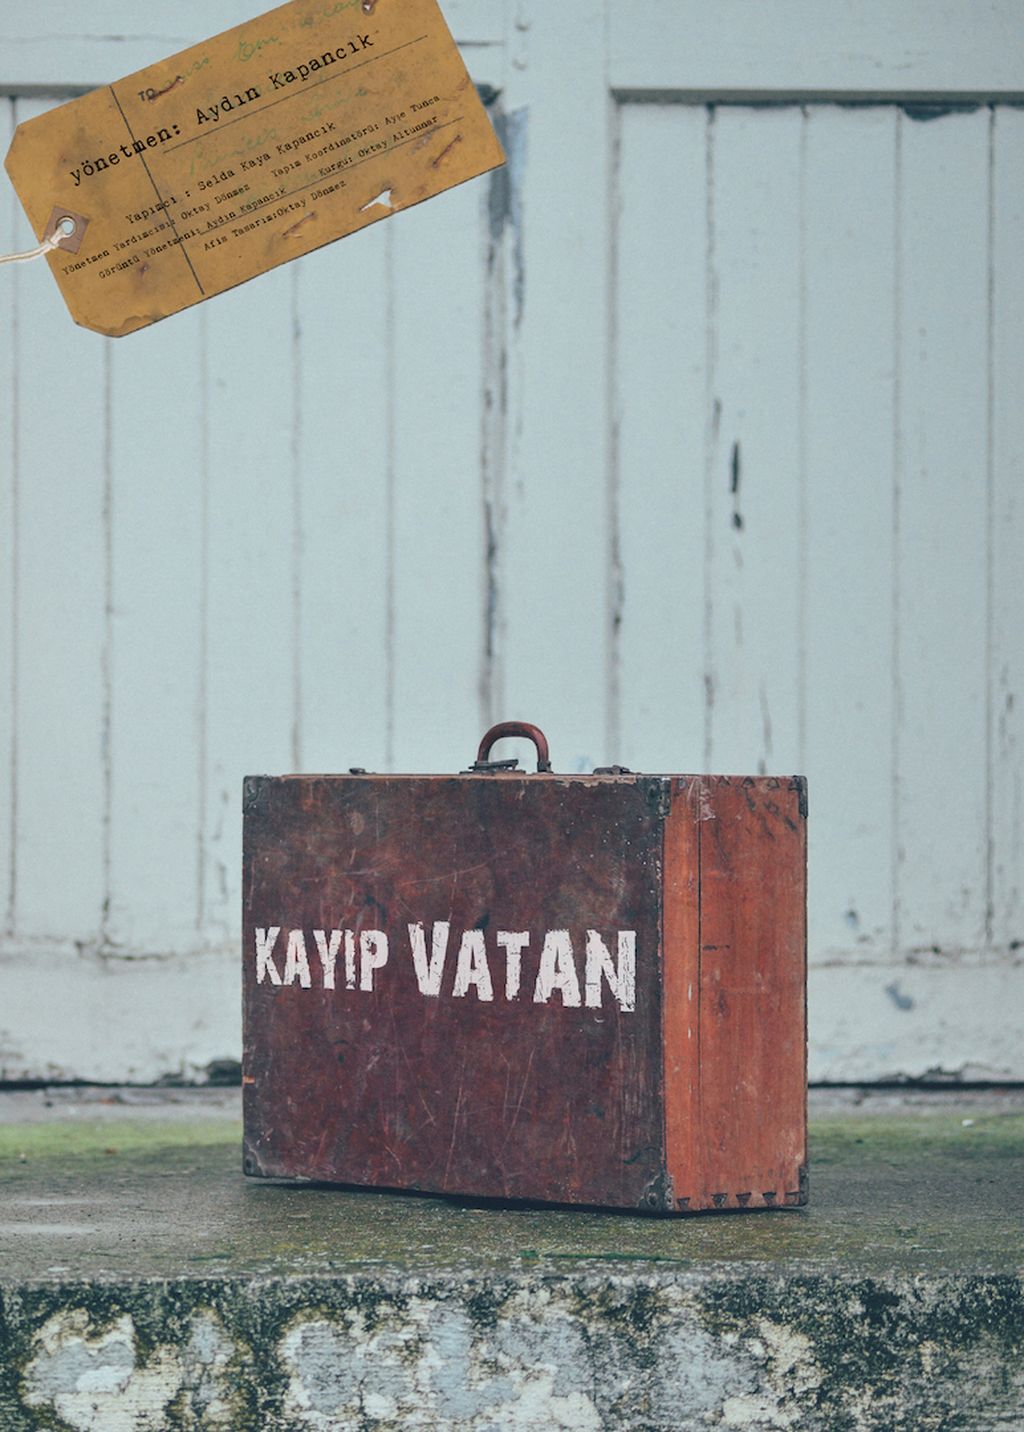 KAYIP VATAN / LOST HOMELAND